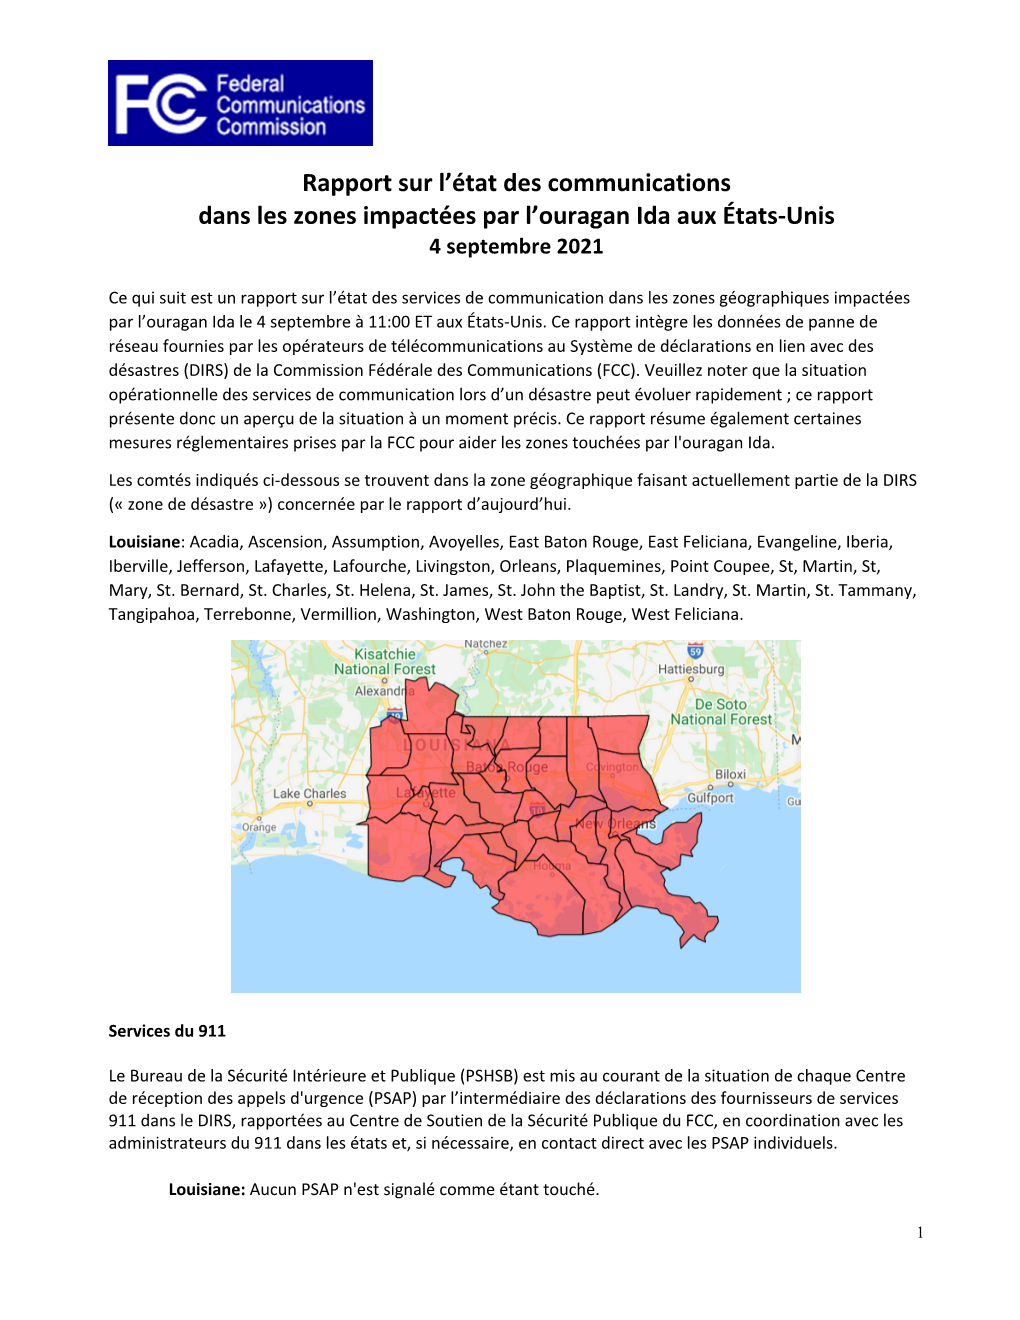 FCC Public Outage Report -Hurricane Ida -09-04-2021 French V2